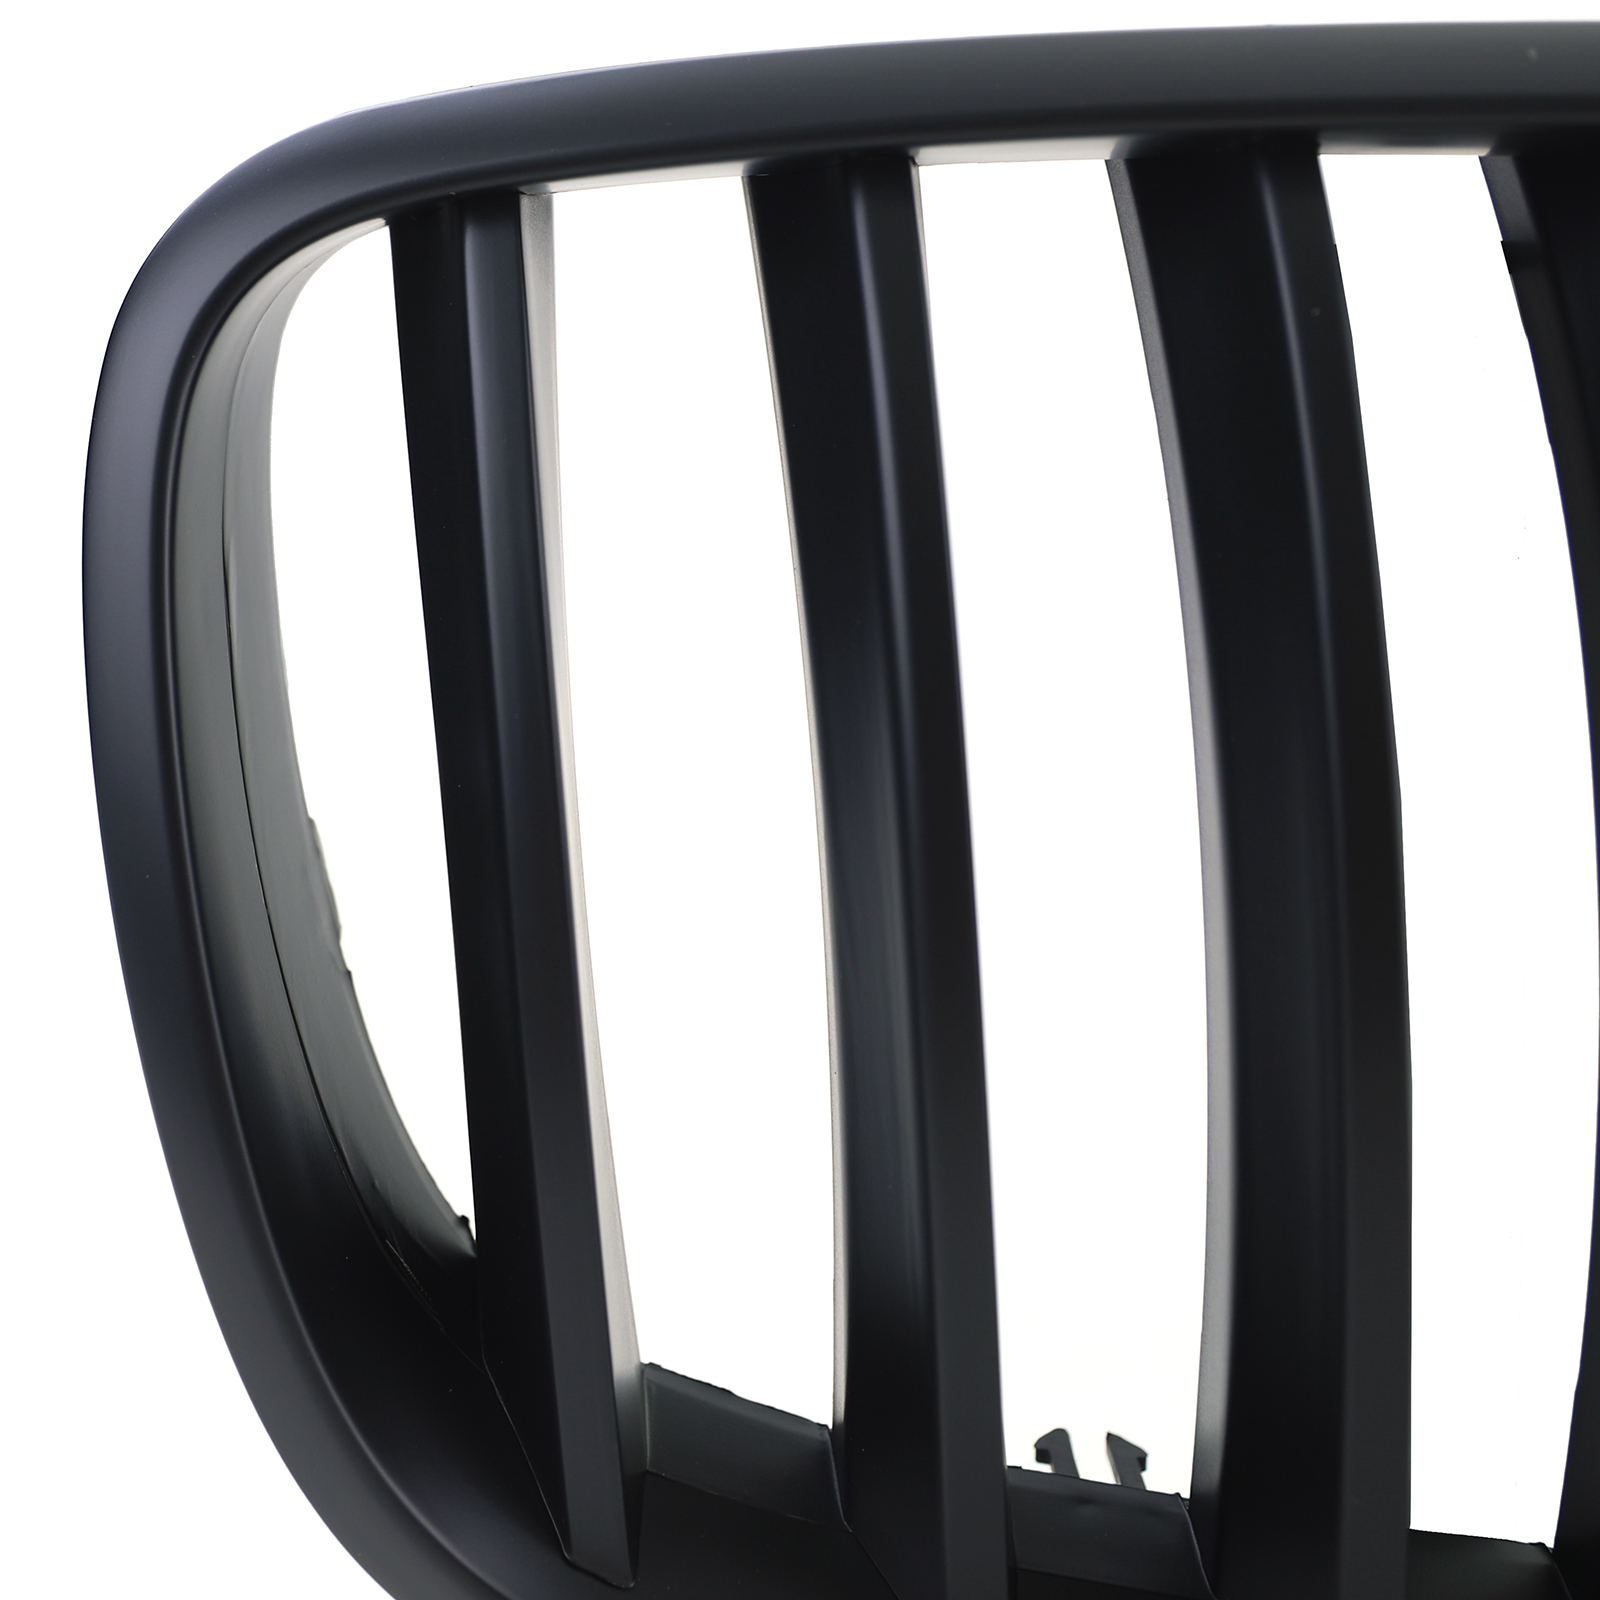 Front grilles kidney for BMW X5/X6 E70/E71 07-14 Performance Black matt